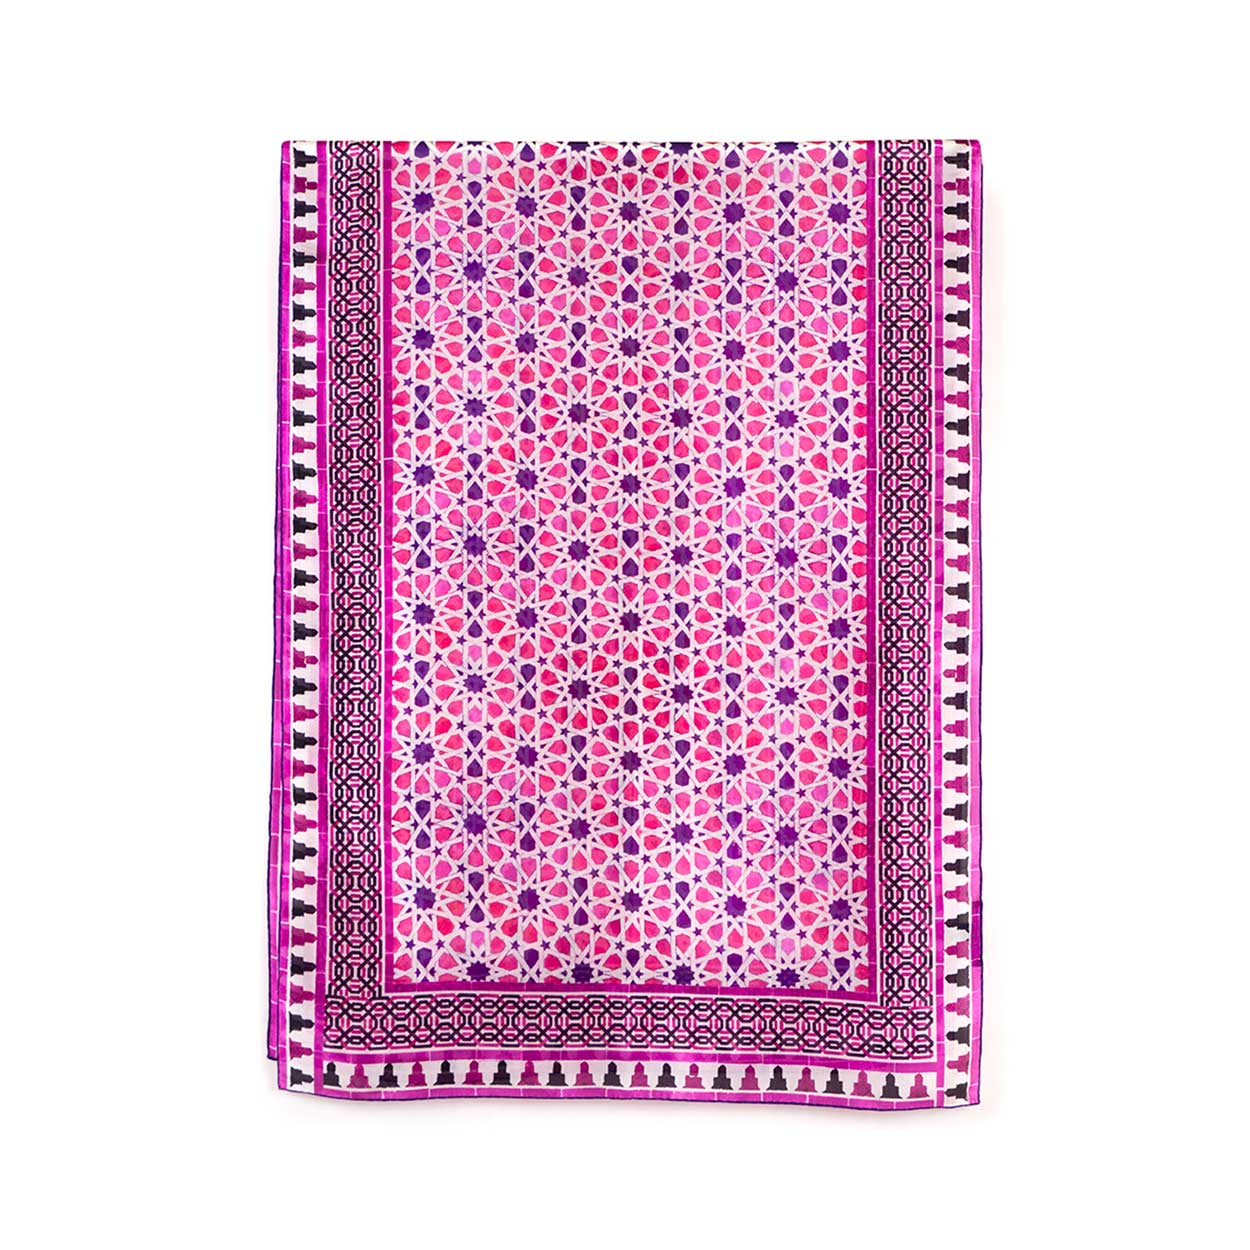 Large pink silk scarf with Moorish tiles art